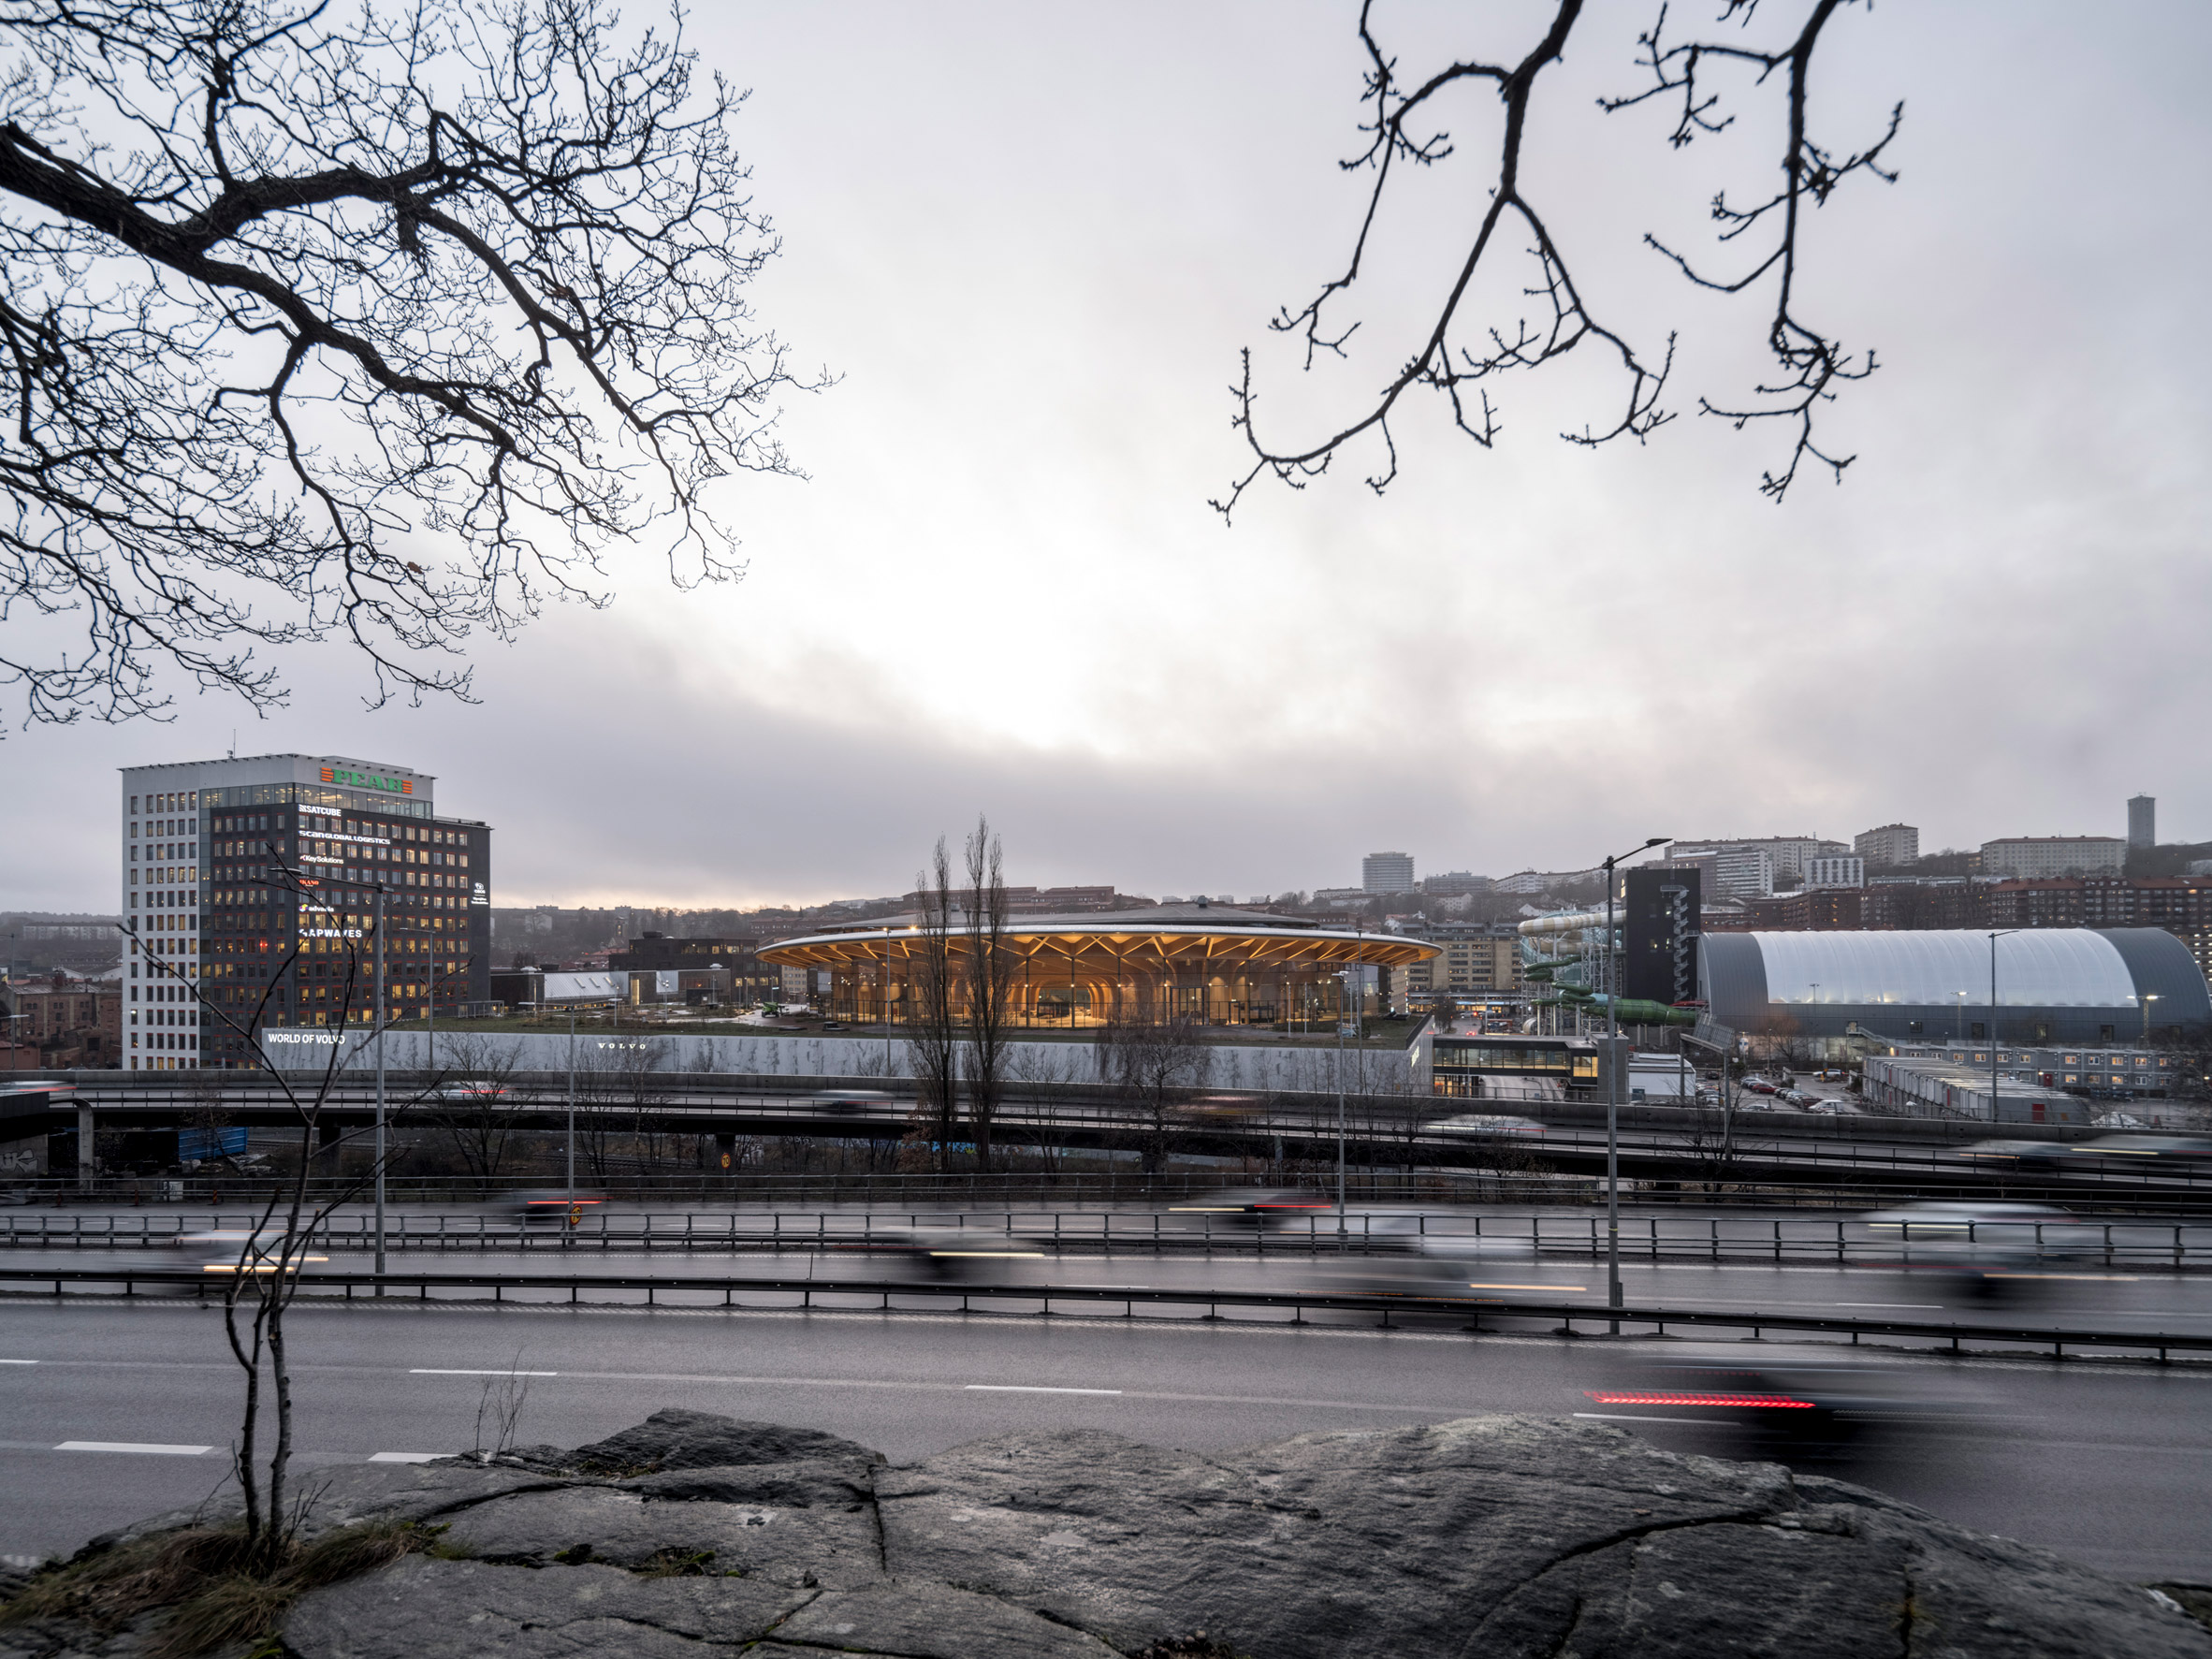 Mass timber experience centre in Gothenburg by Henning Larsen